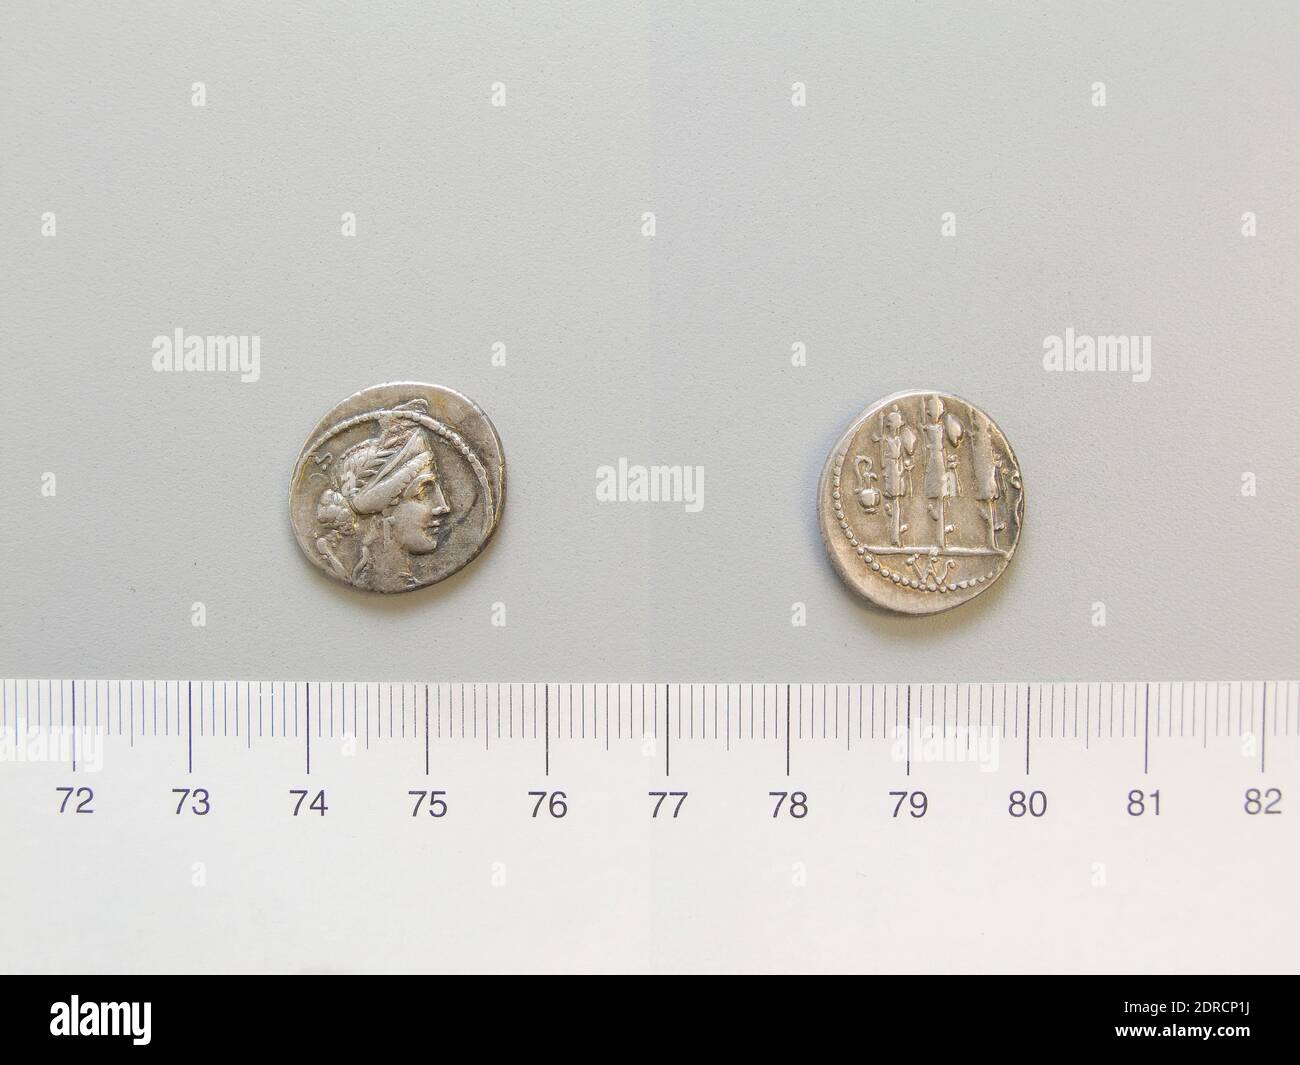 Mint: Rome, Magistrate: Faustus Cornelius Sulla, Denarius from Rome, 56 B.C., Silver, 3.84 g, 4:00, 18.4 mm, Made in Rome, Italy, Roman, 1st century B.C., Numismatics Stock Photo